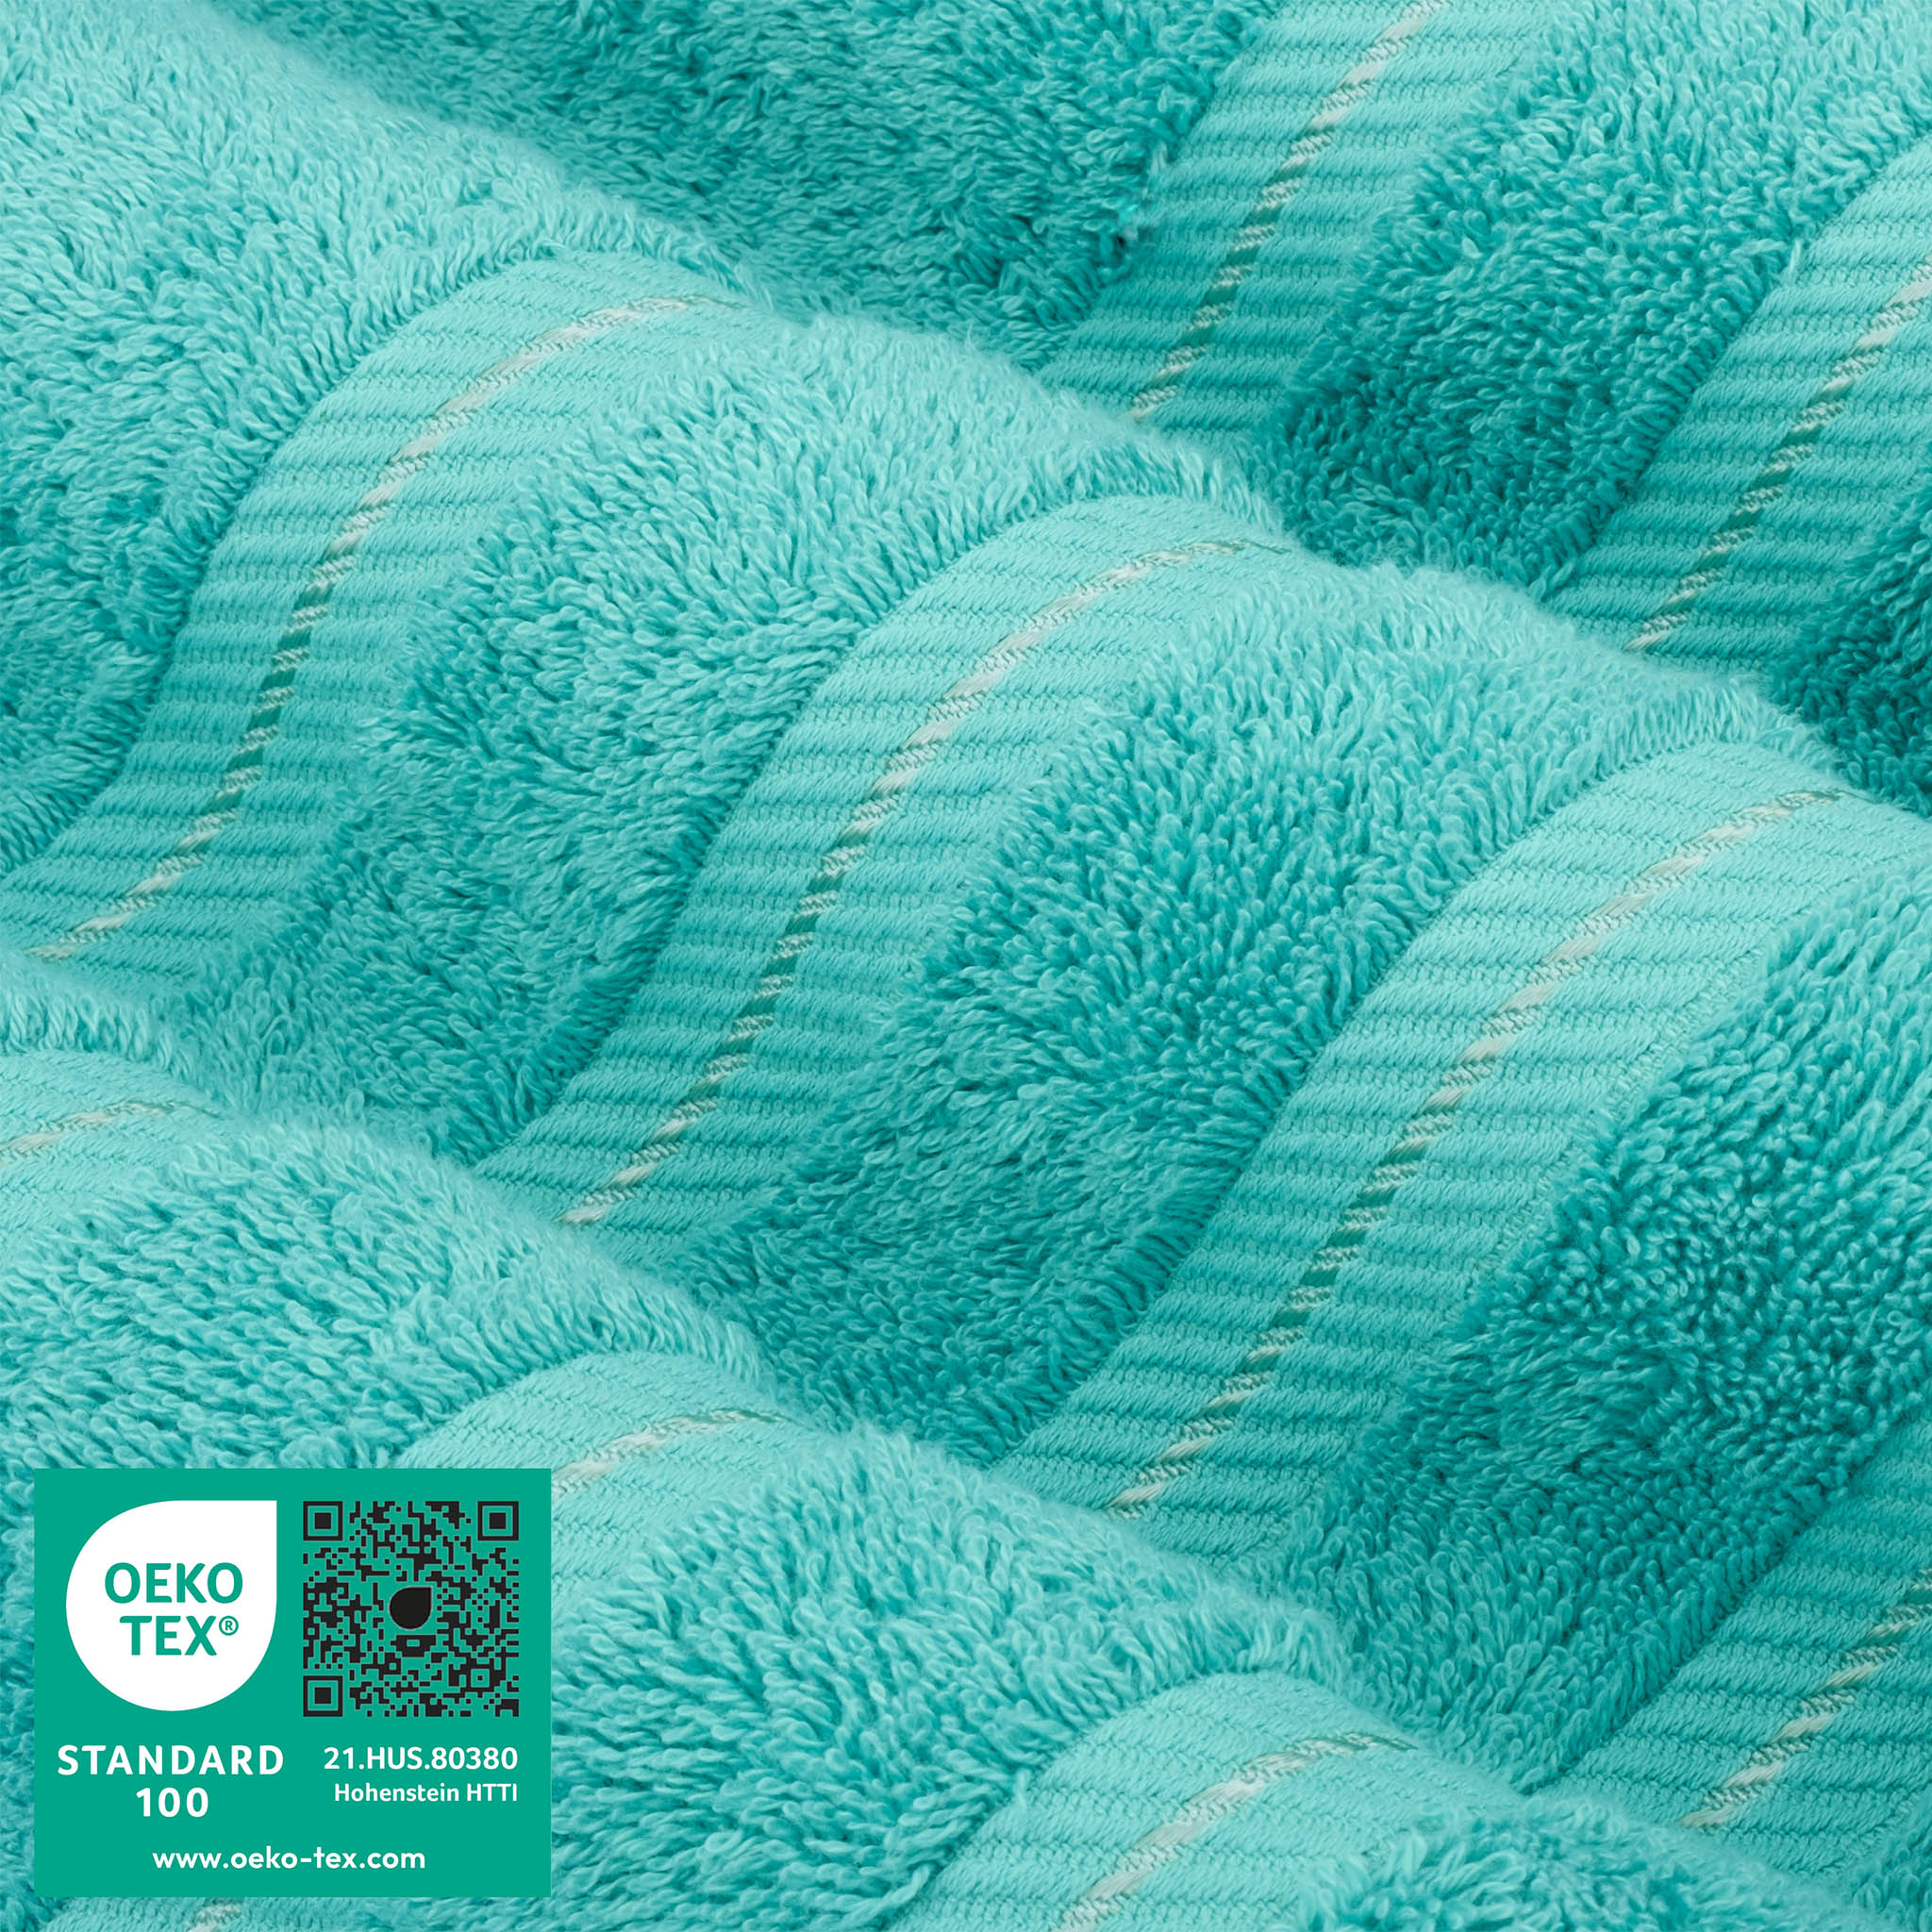 American Soft Linen Bath Sheet 35x70 inch 100% Turkish Cotton Bath Towel Sheets - Sky Blue, Size: Jumbo Bath Sheet 35x70